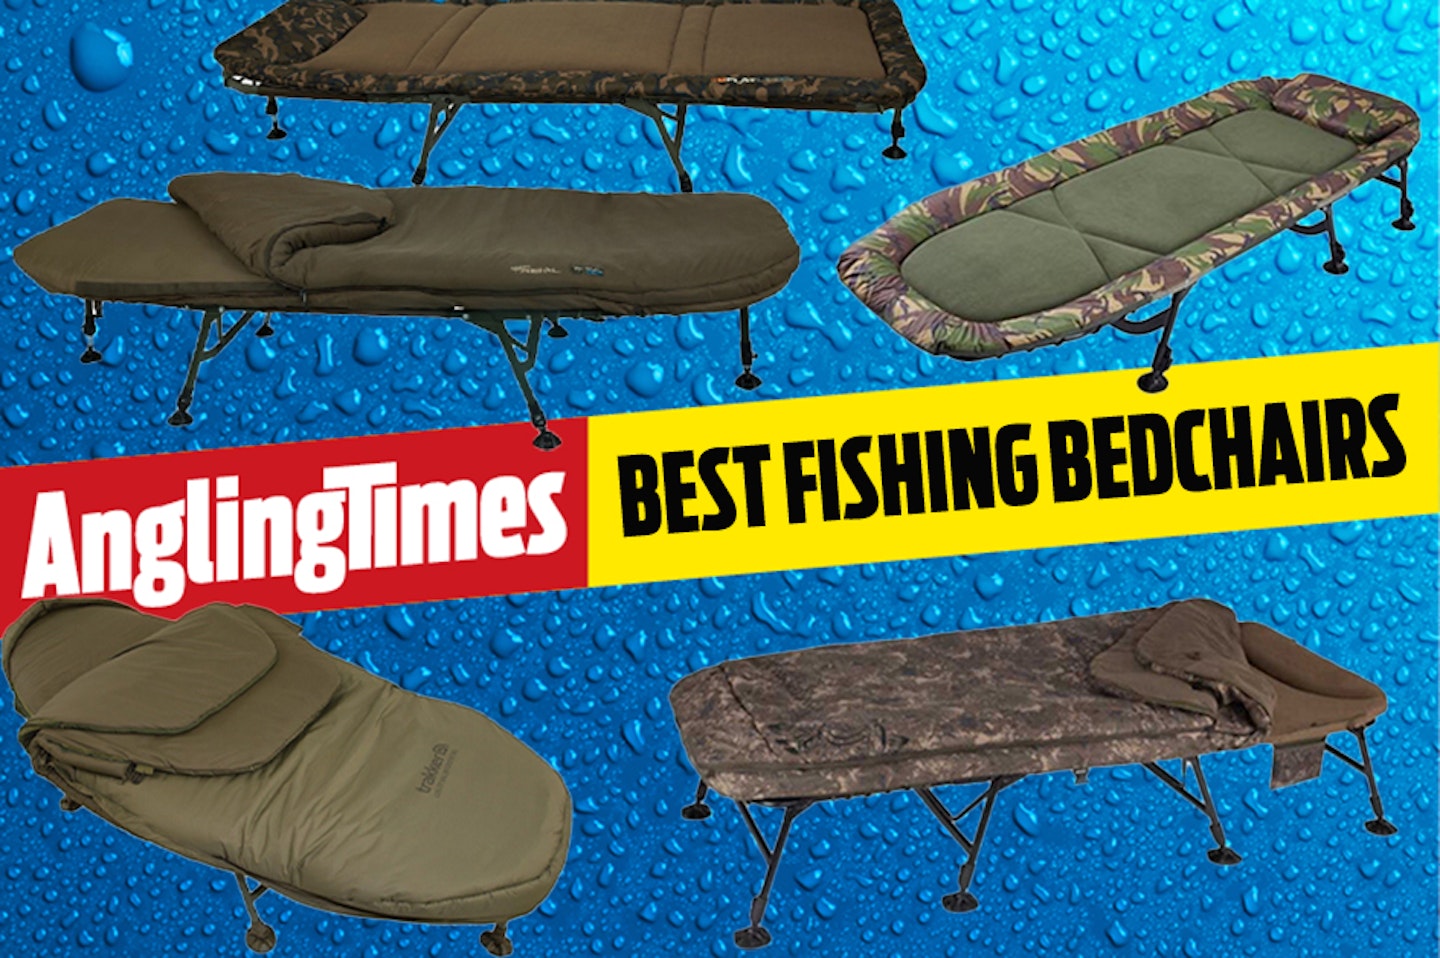 https://images.bauerhosting.com/marketing/sites/2/2023/09/Best-fishing-bedchairs.jpg?ar=16%3A9&fit=crop&crop=top&auto=format&w=1440&q=80